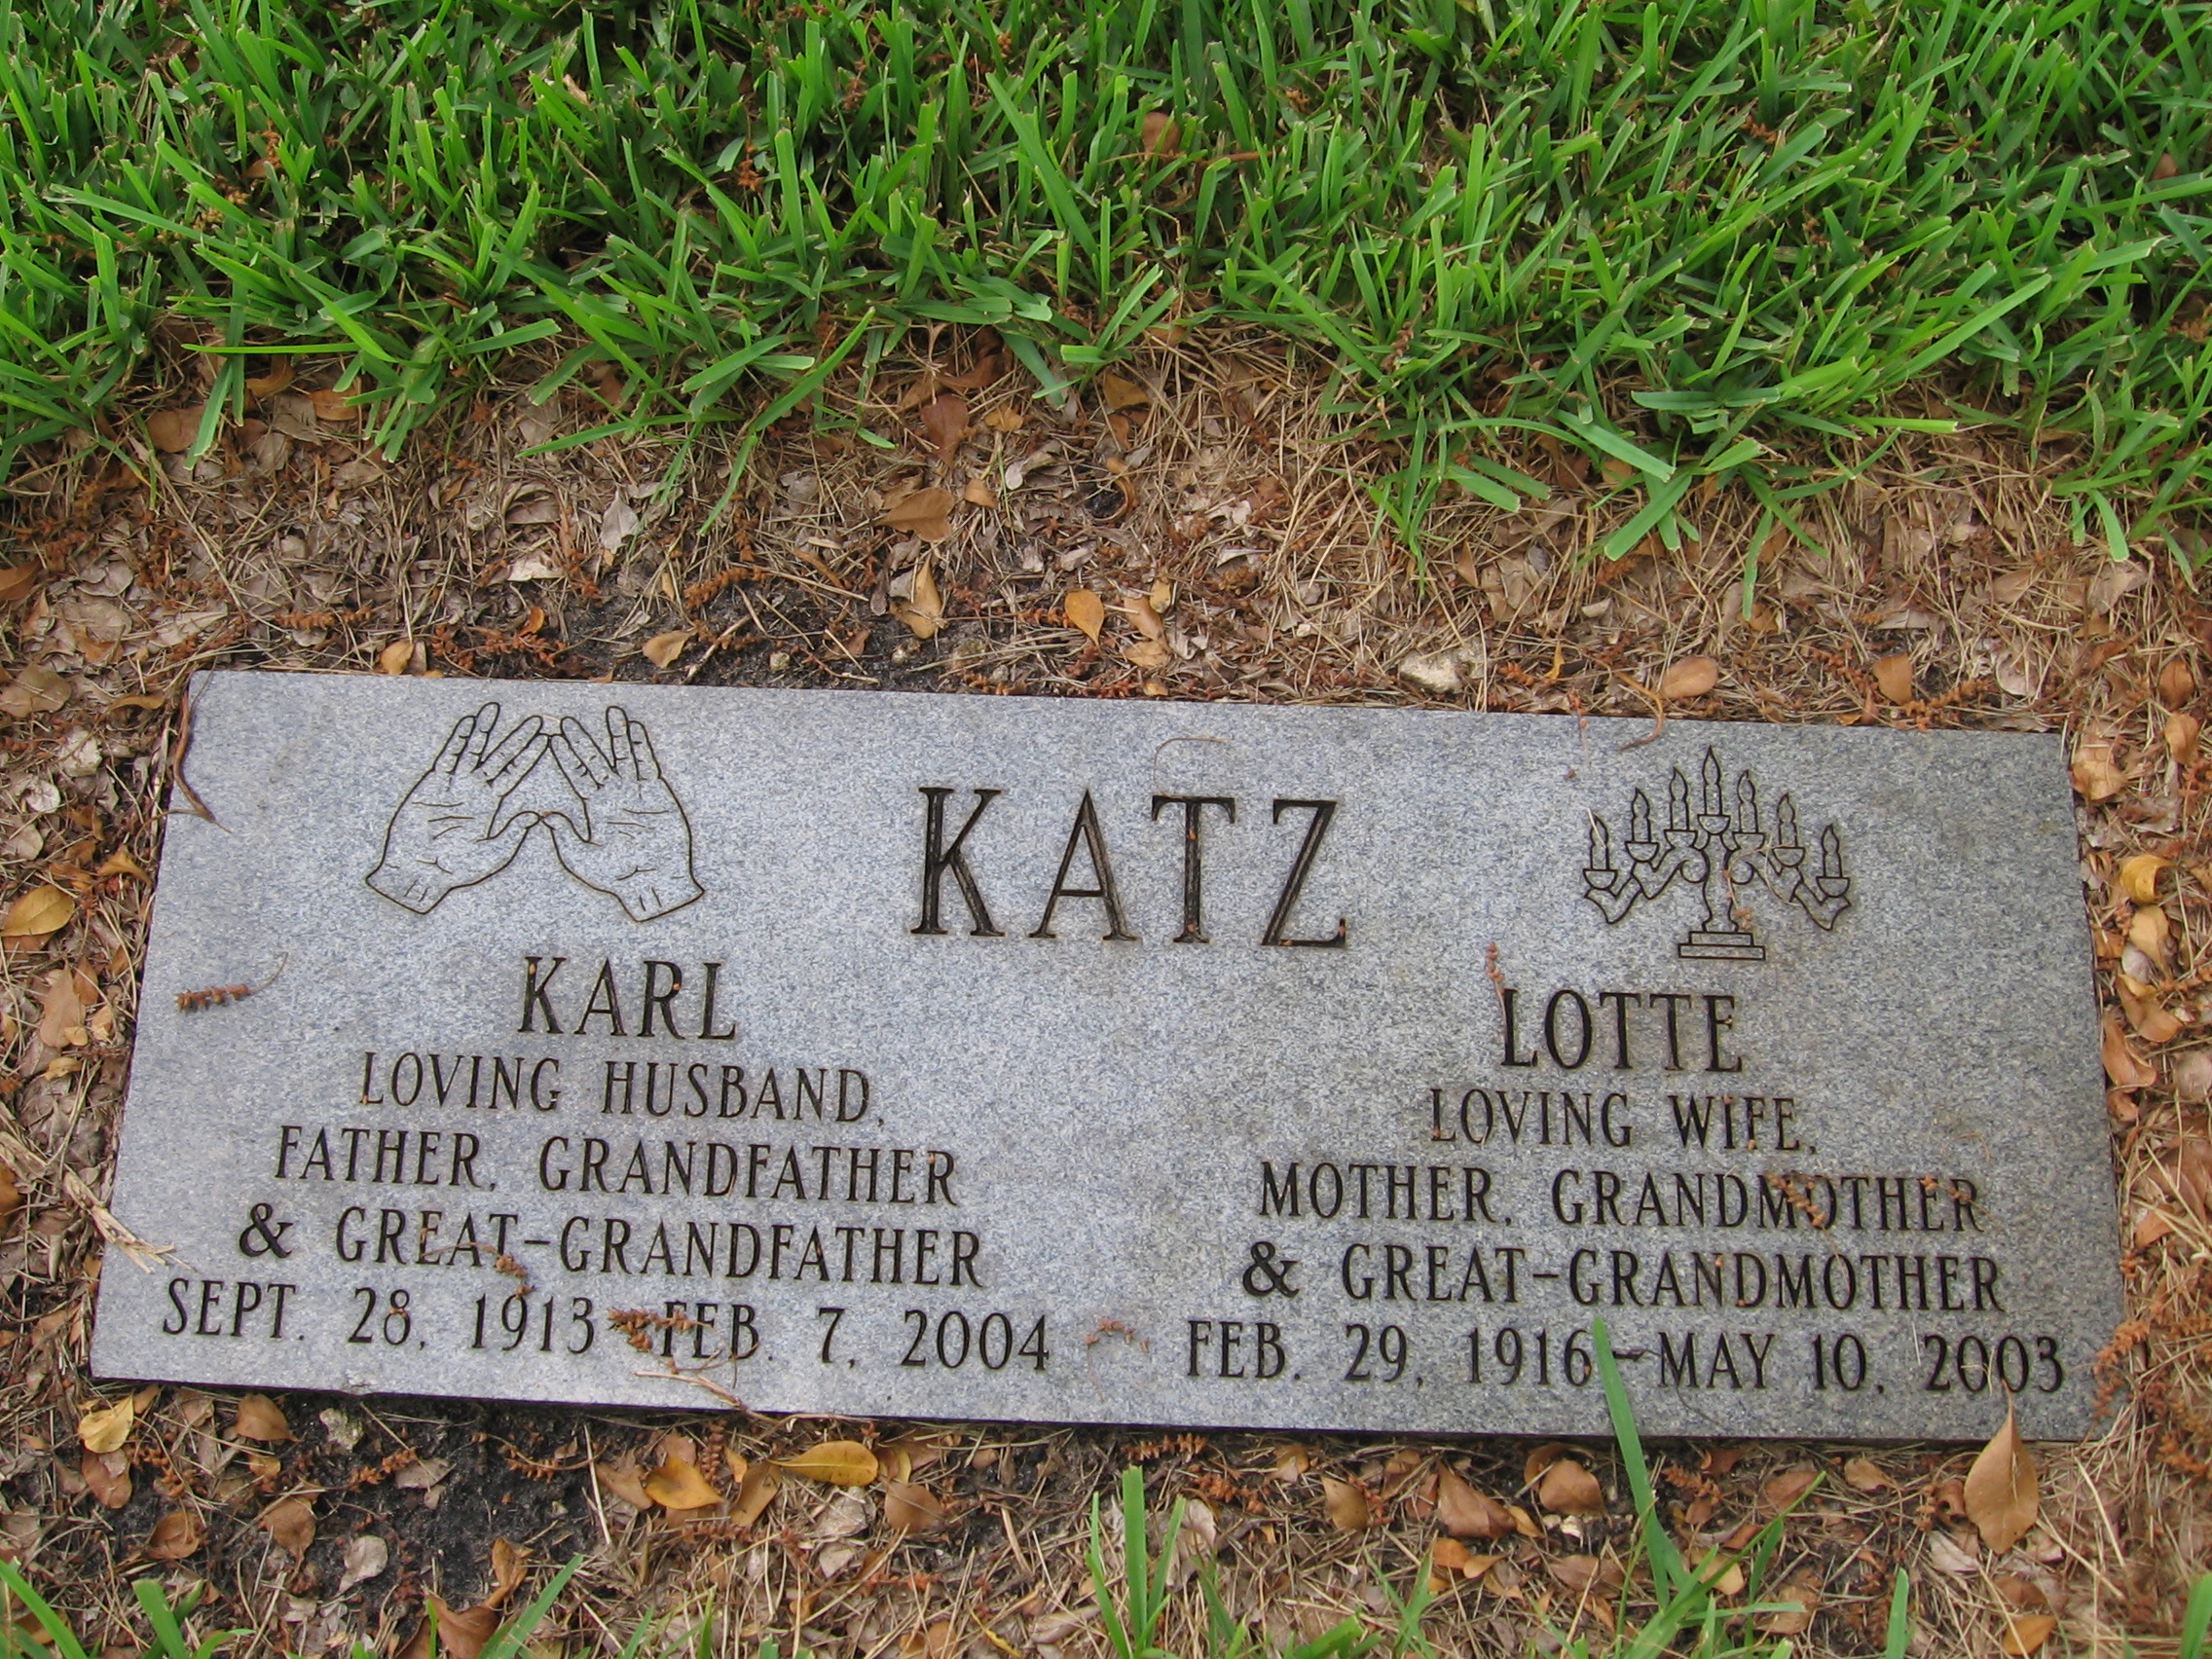 Karl Katz